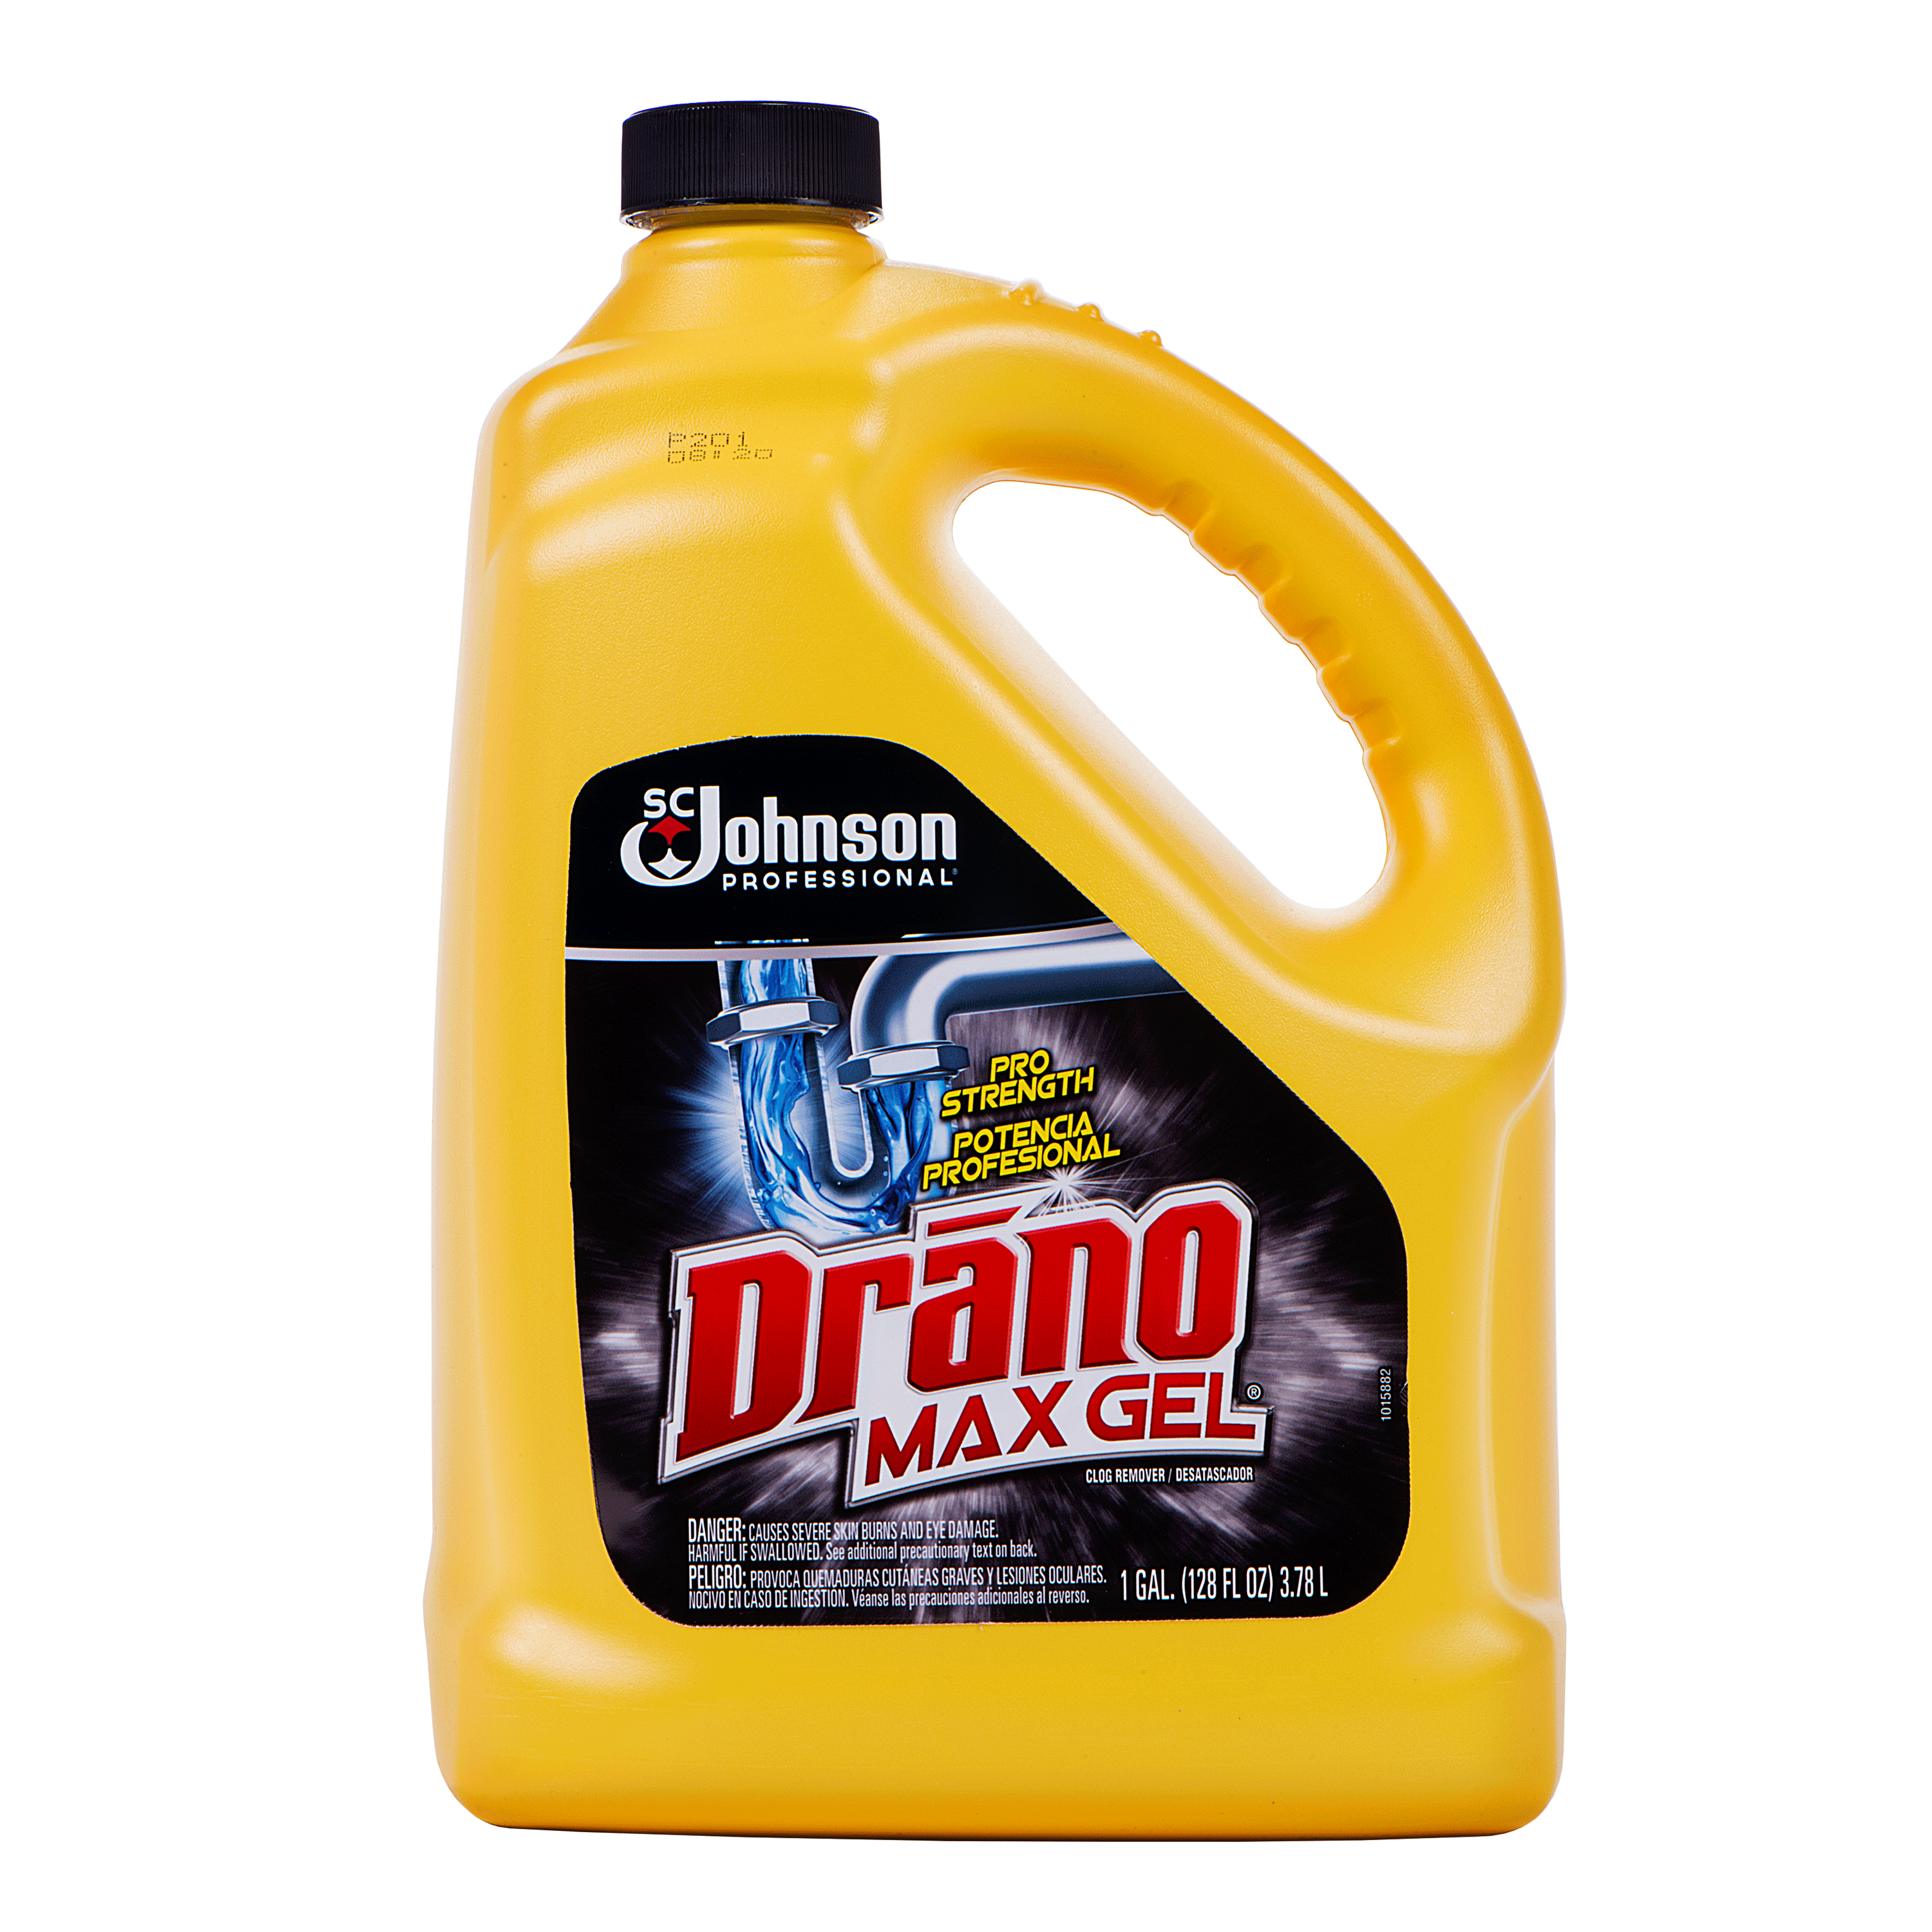 drano-max-gel-clog-removers-sc-johnson-professional